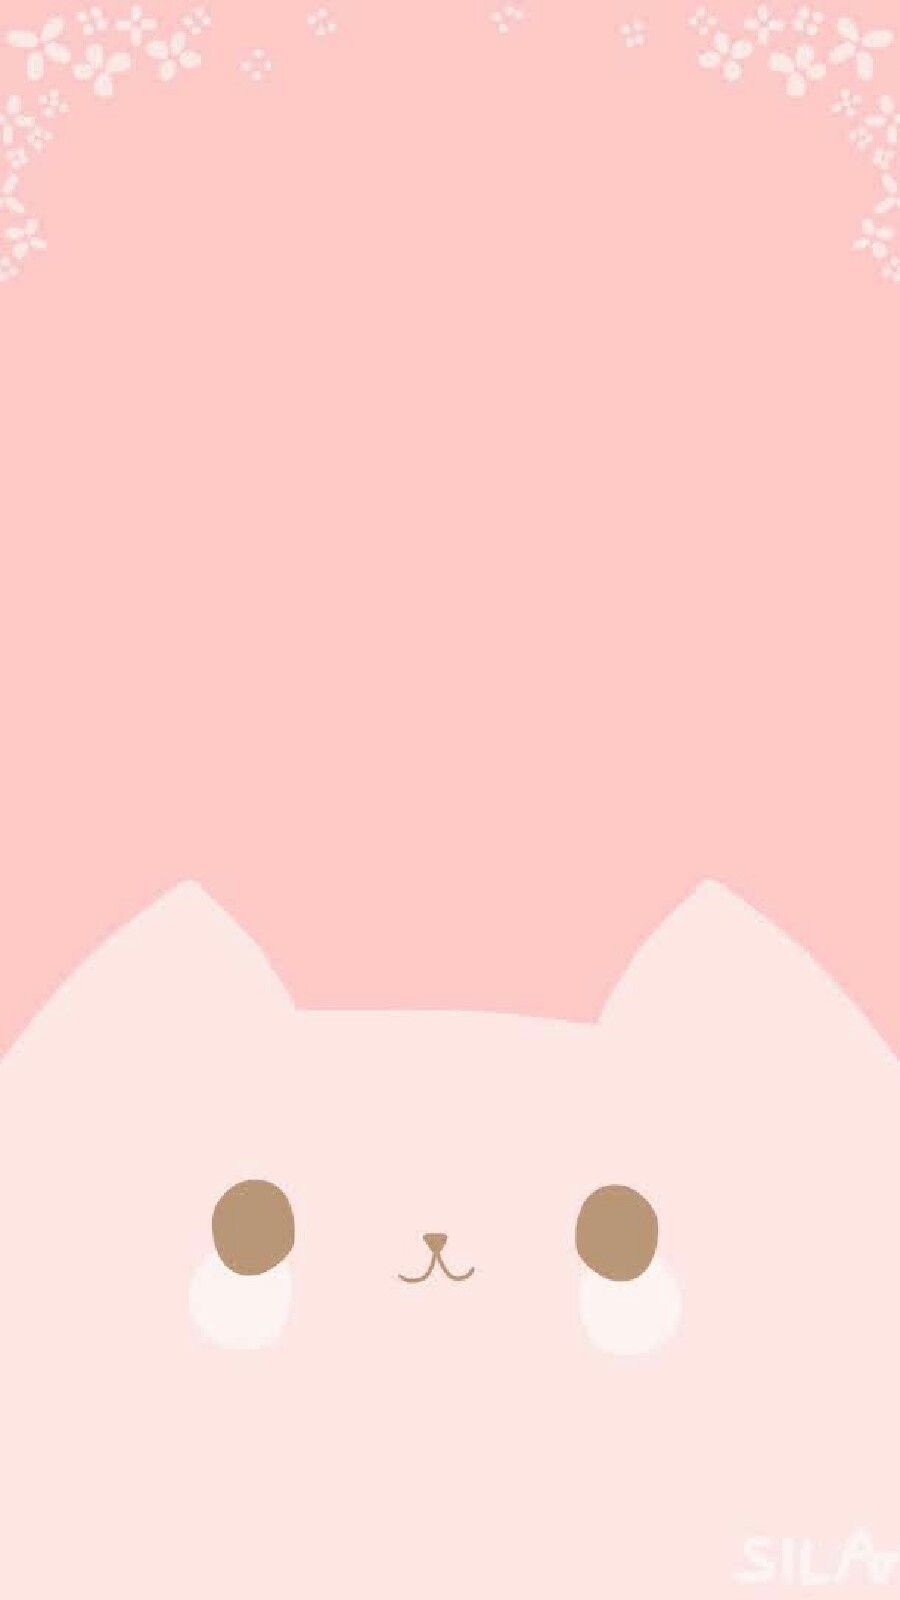 Best #Wallpaper #Mobile #Kawaii #Cute #iPhone #Android #Love #Follow #Like #Pink #Cat. iPhone wallpaper kawaii, Wallpaper iphone cute, Wallpaper phone cute